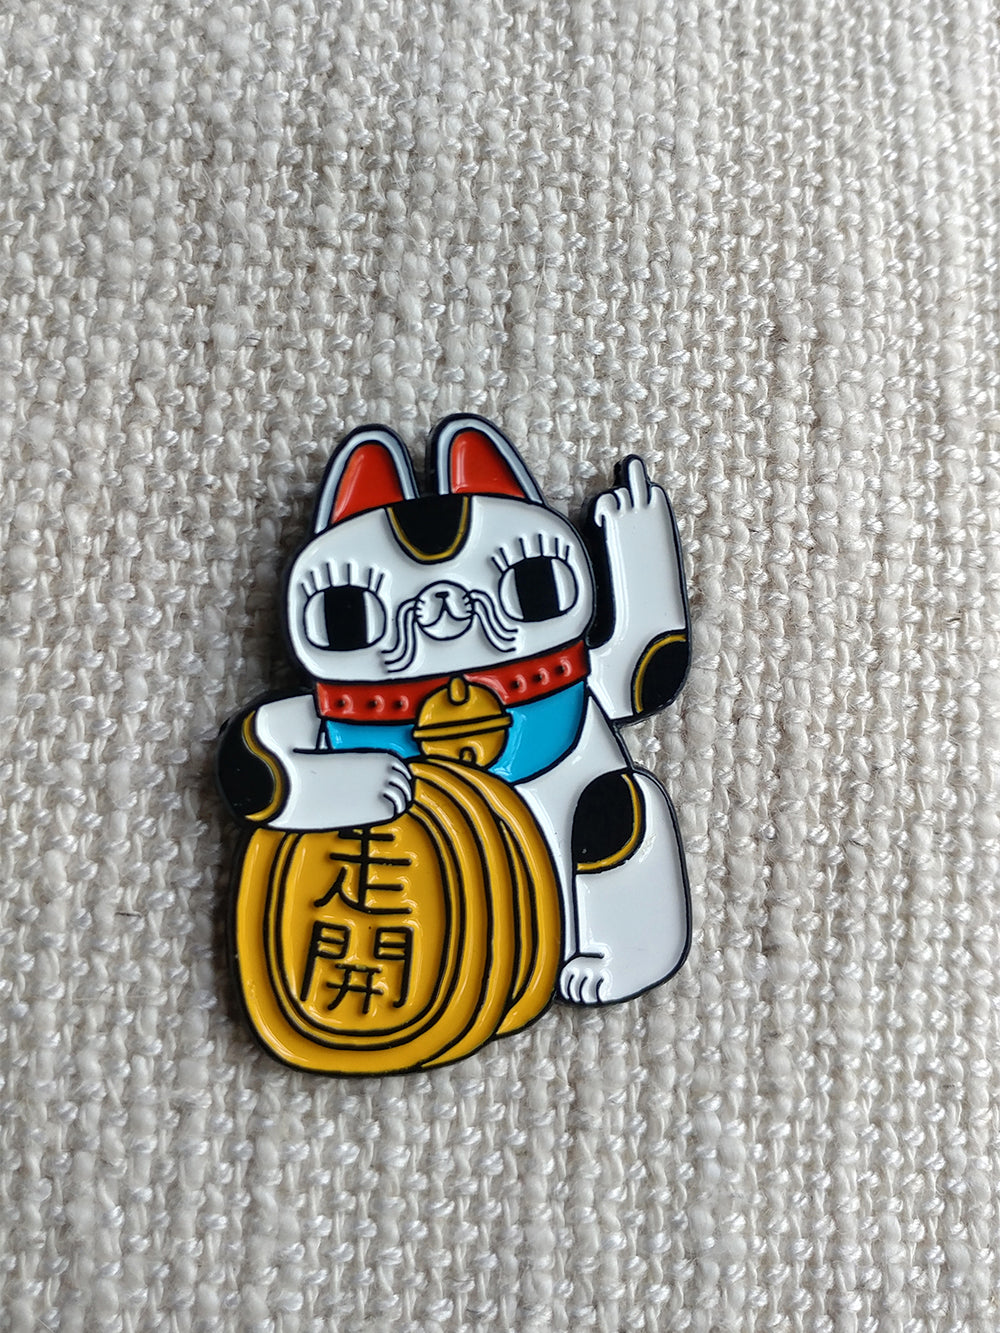 Unlucky cat Enamel pin badge